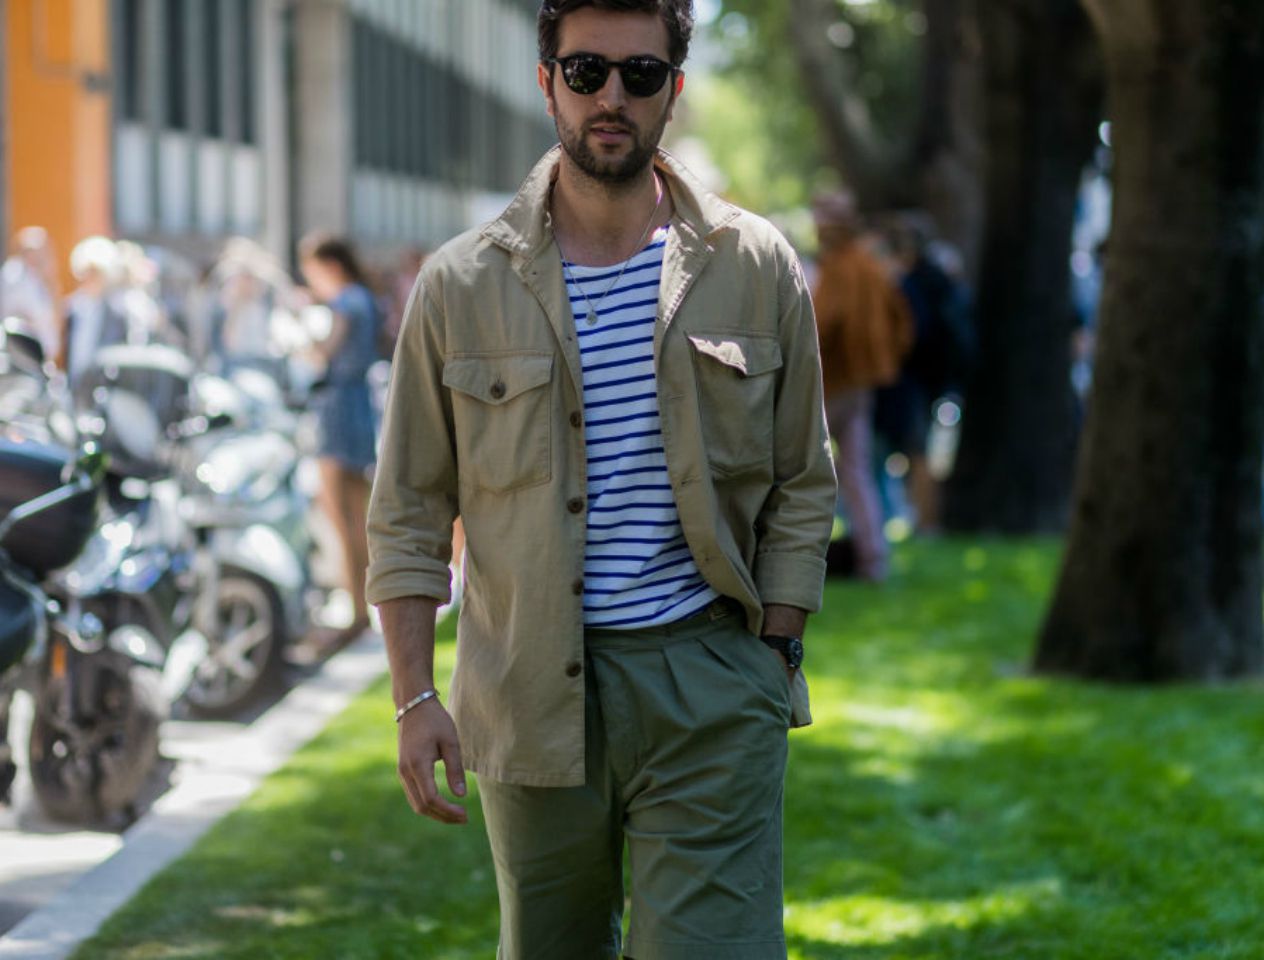 Street style man in a striped Breton top